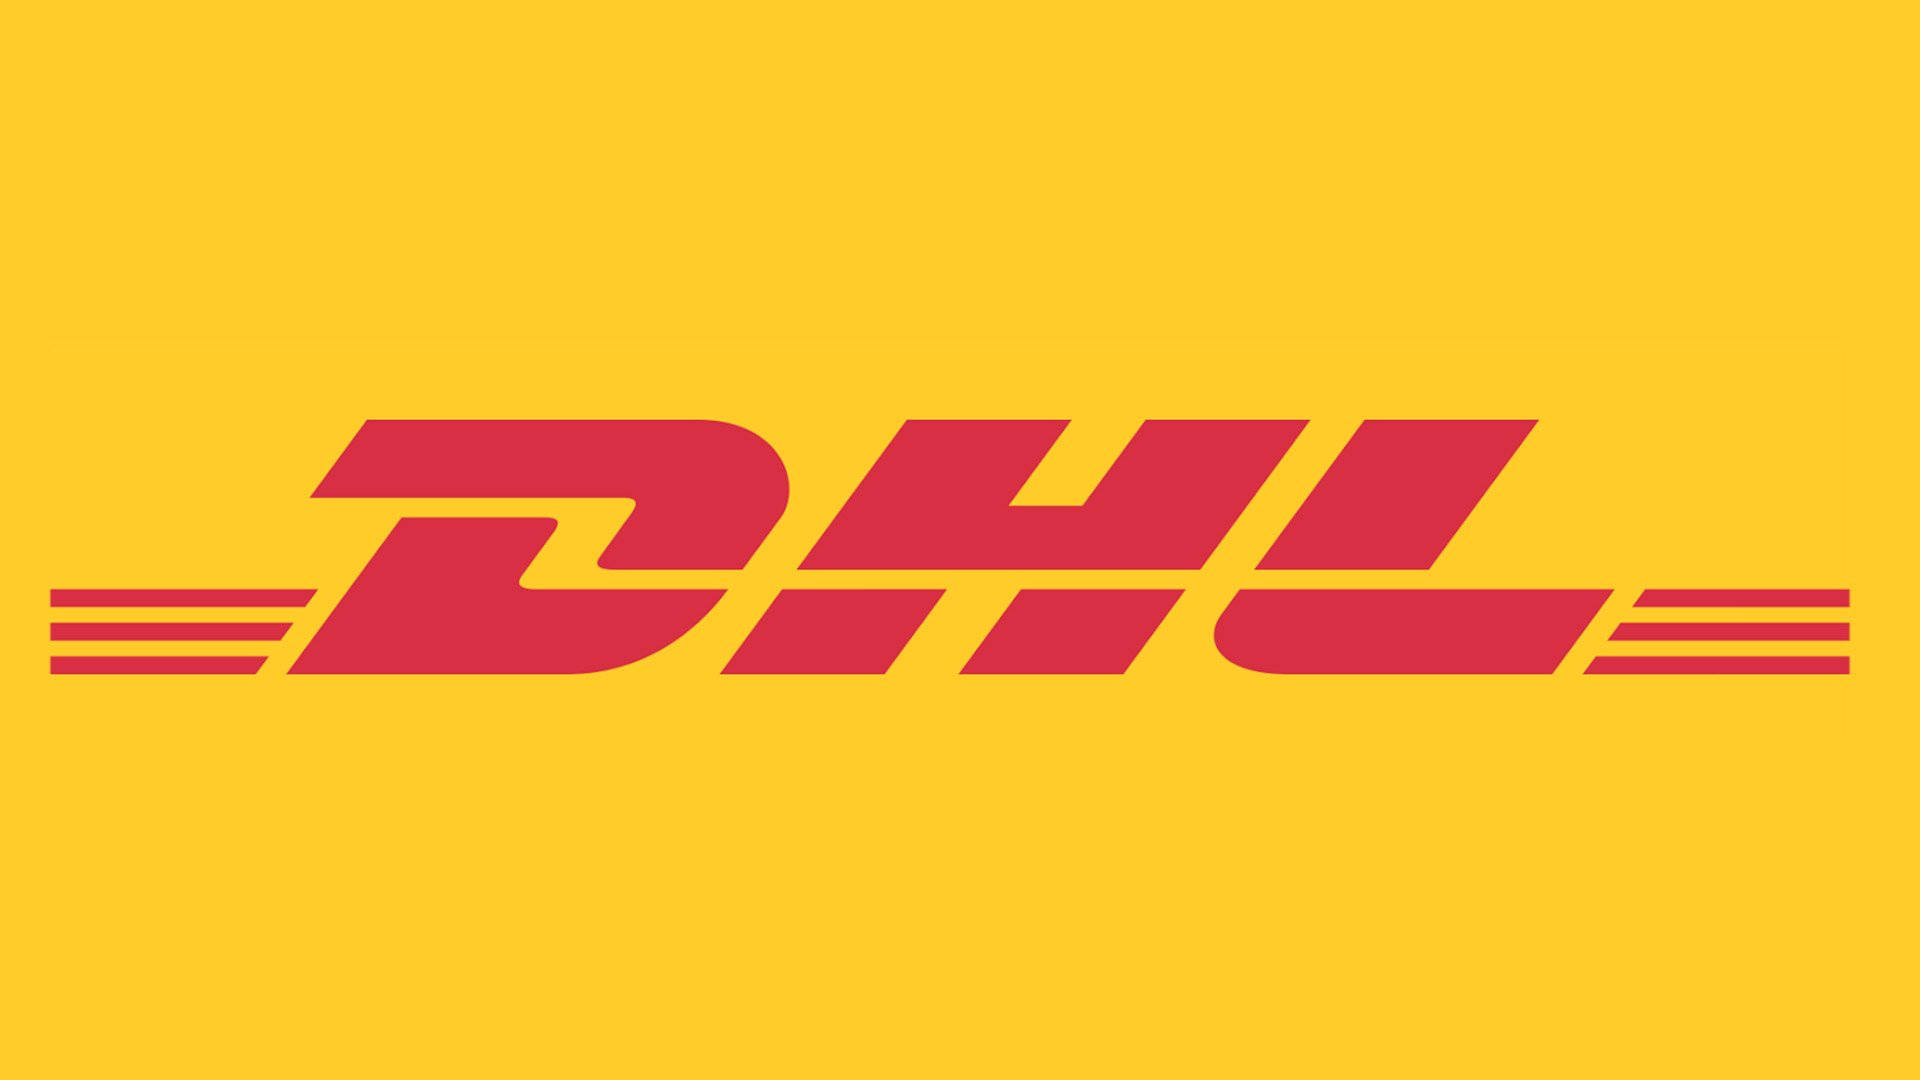 Iconic DHL Logo wallpaper